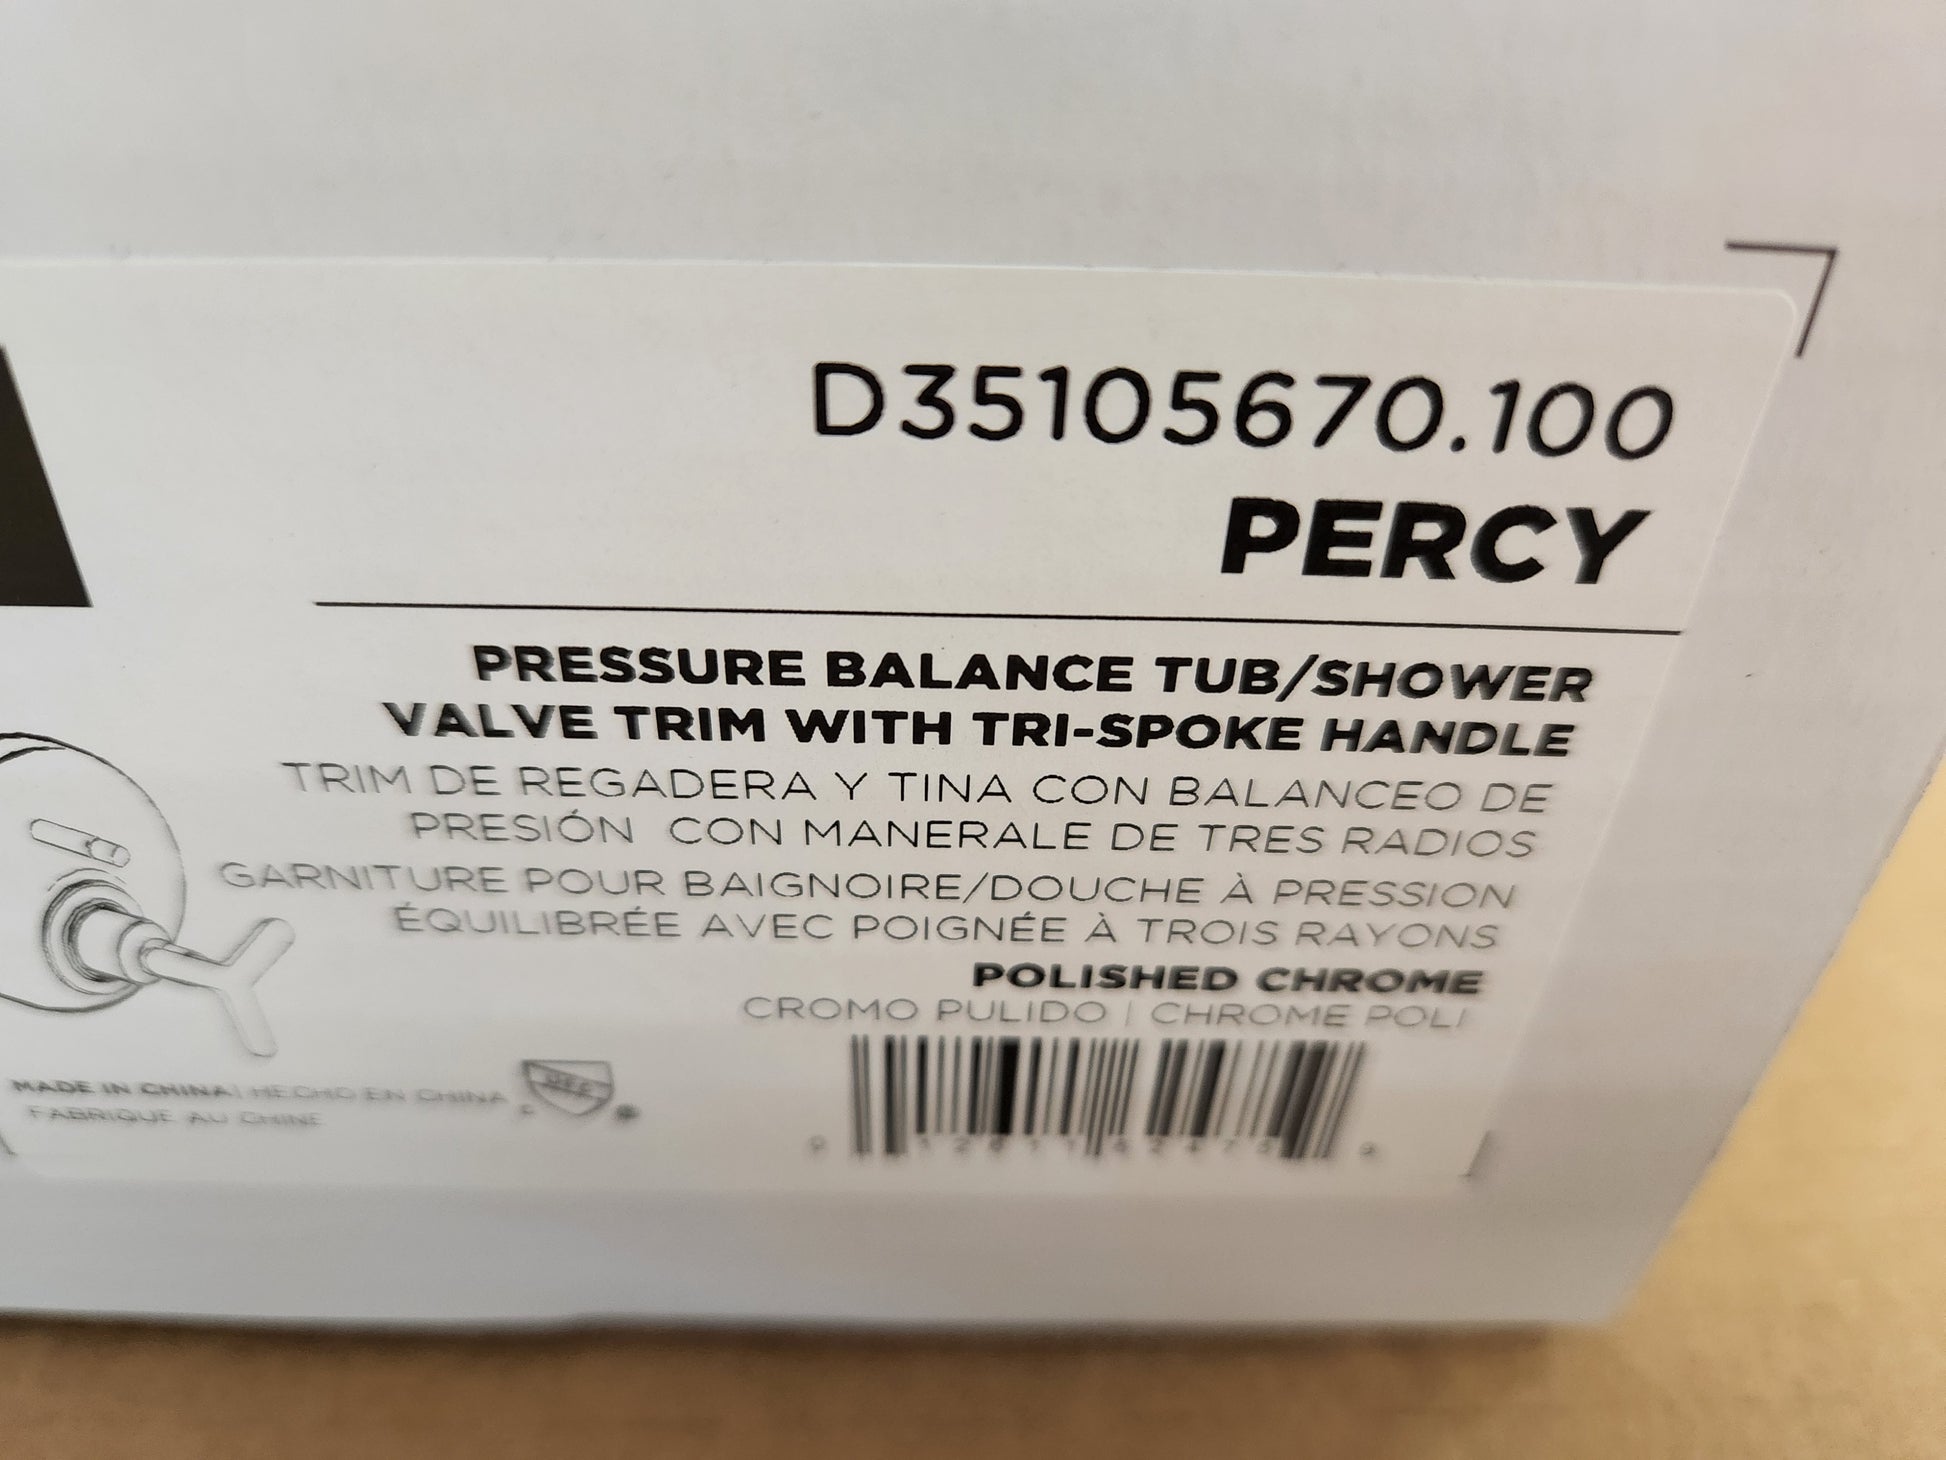 "PERCY" POLISHED CHROME PRESSURE BALANCE TUB/SHOWER VALVE TRIM WITH TRI-SPOKE HANDLE